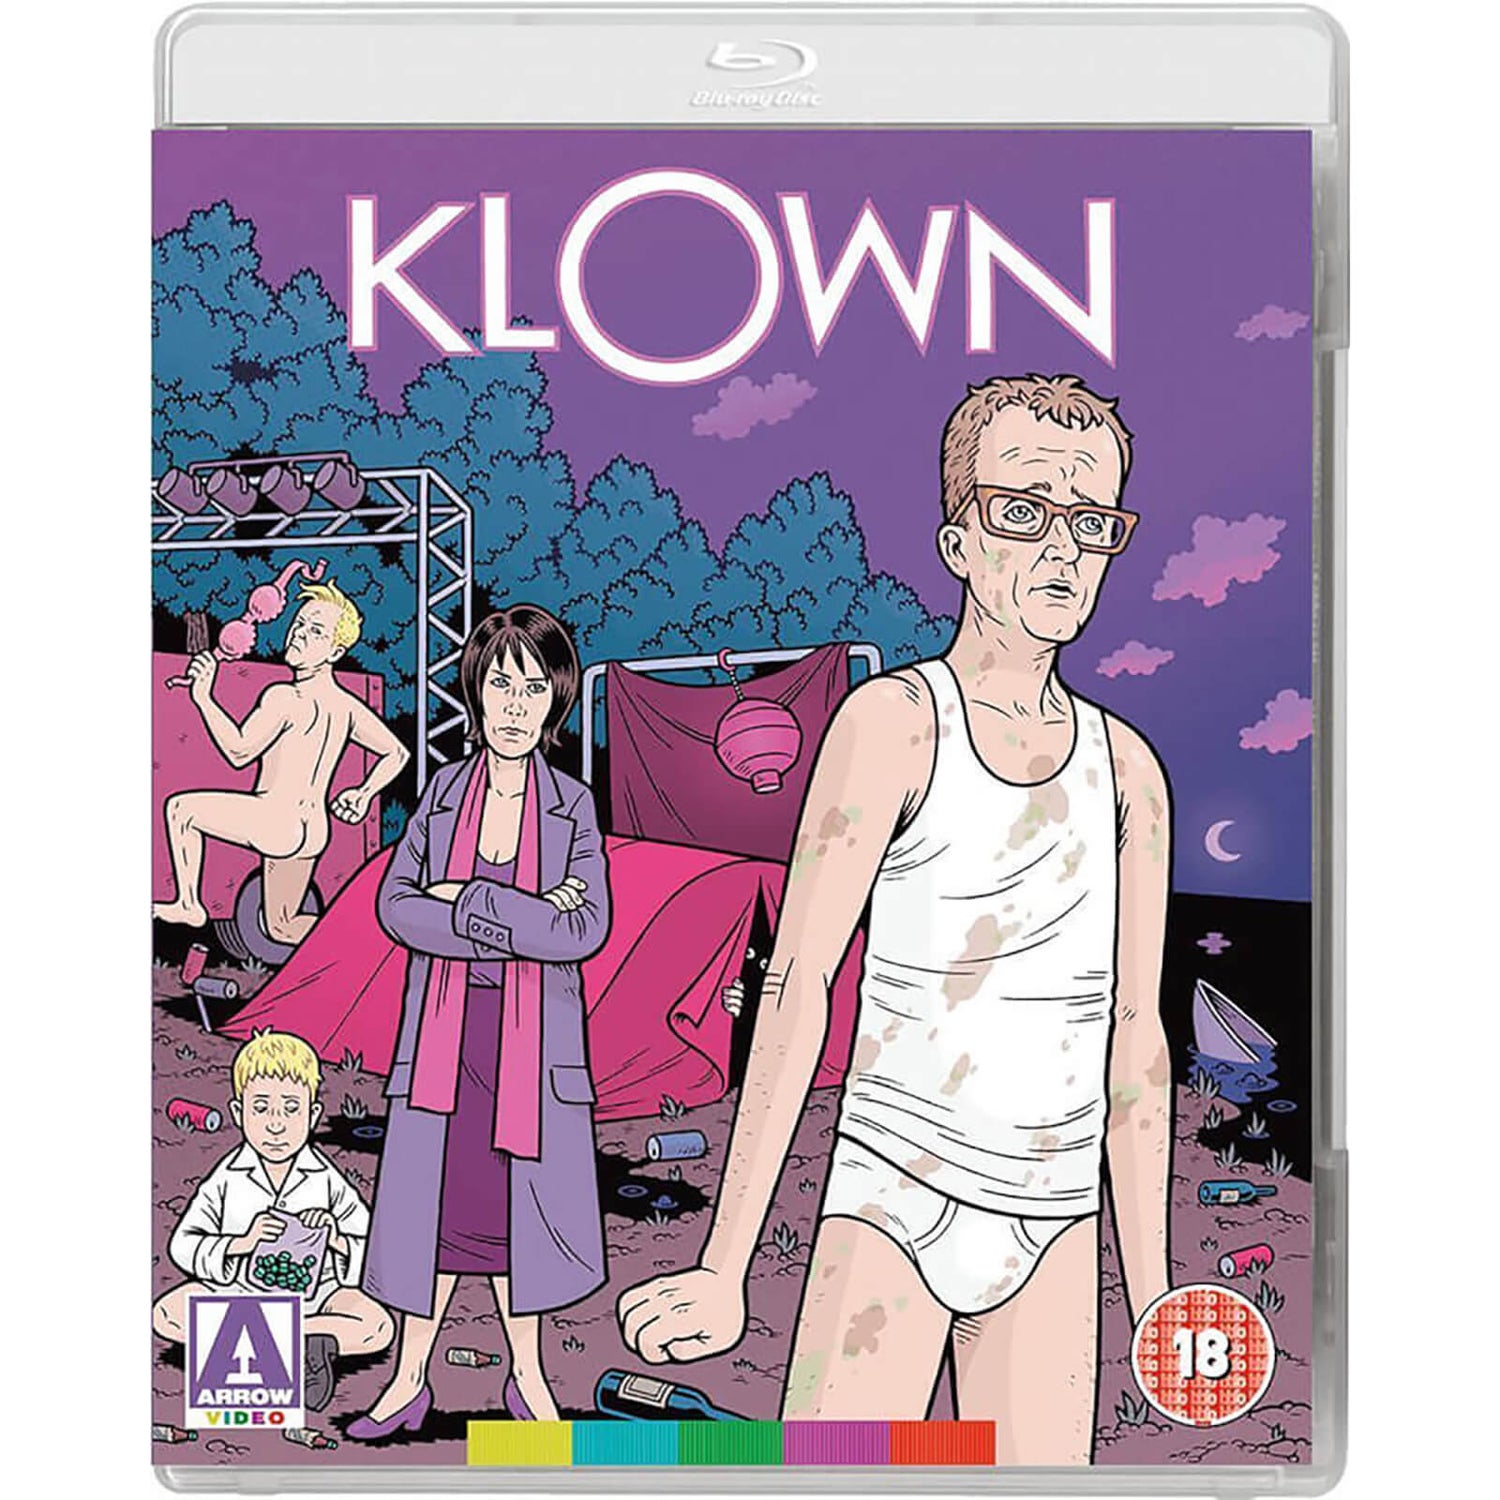 Klown Blu-ray